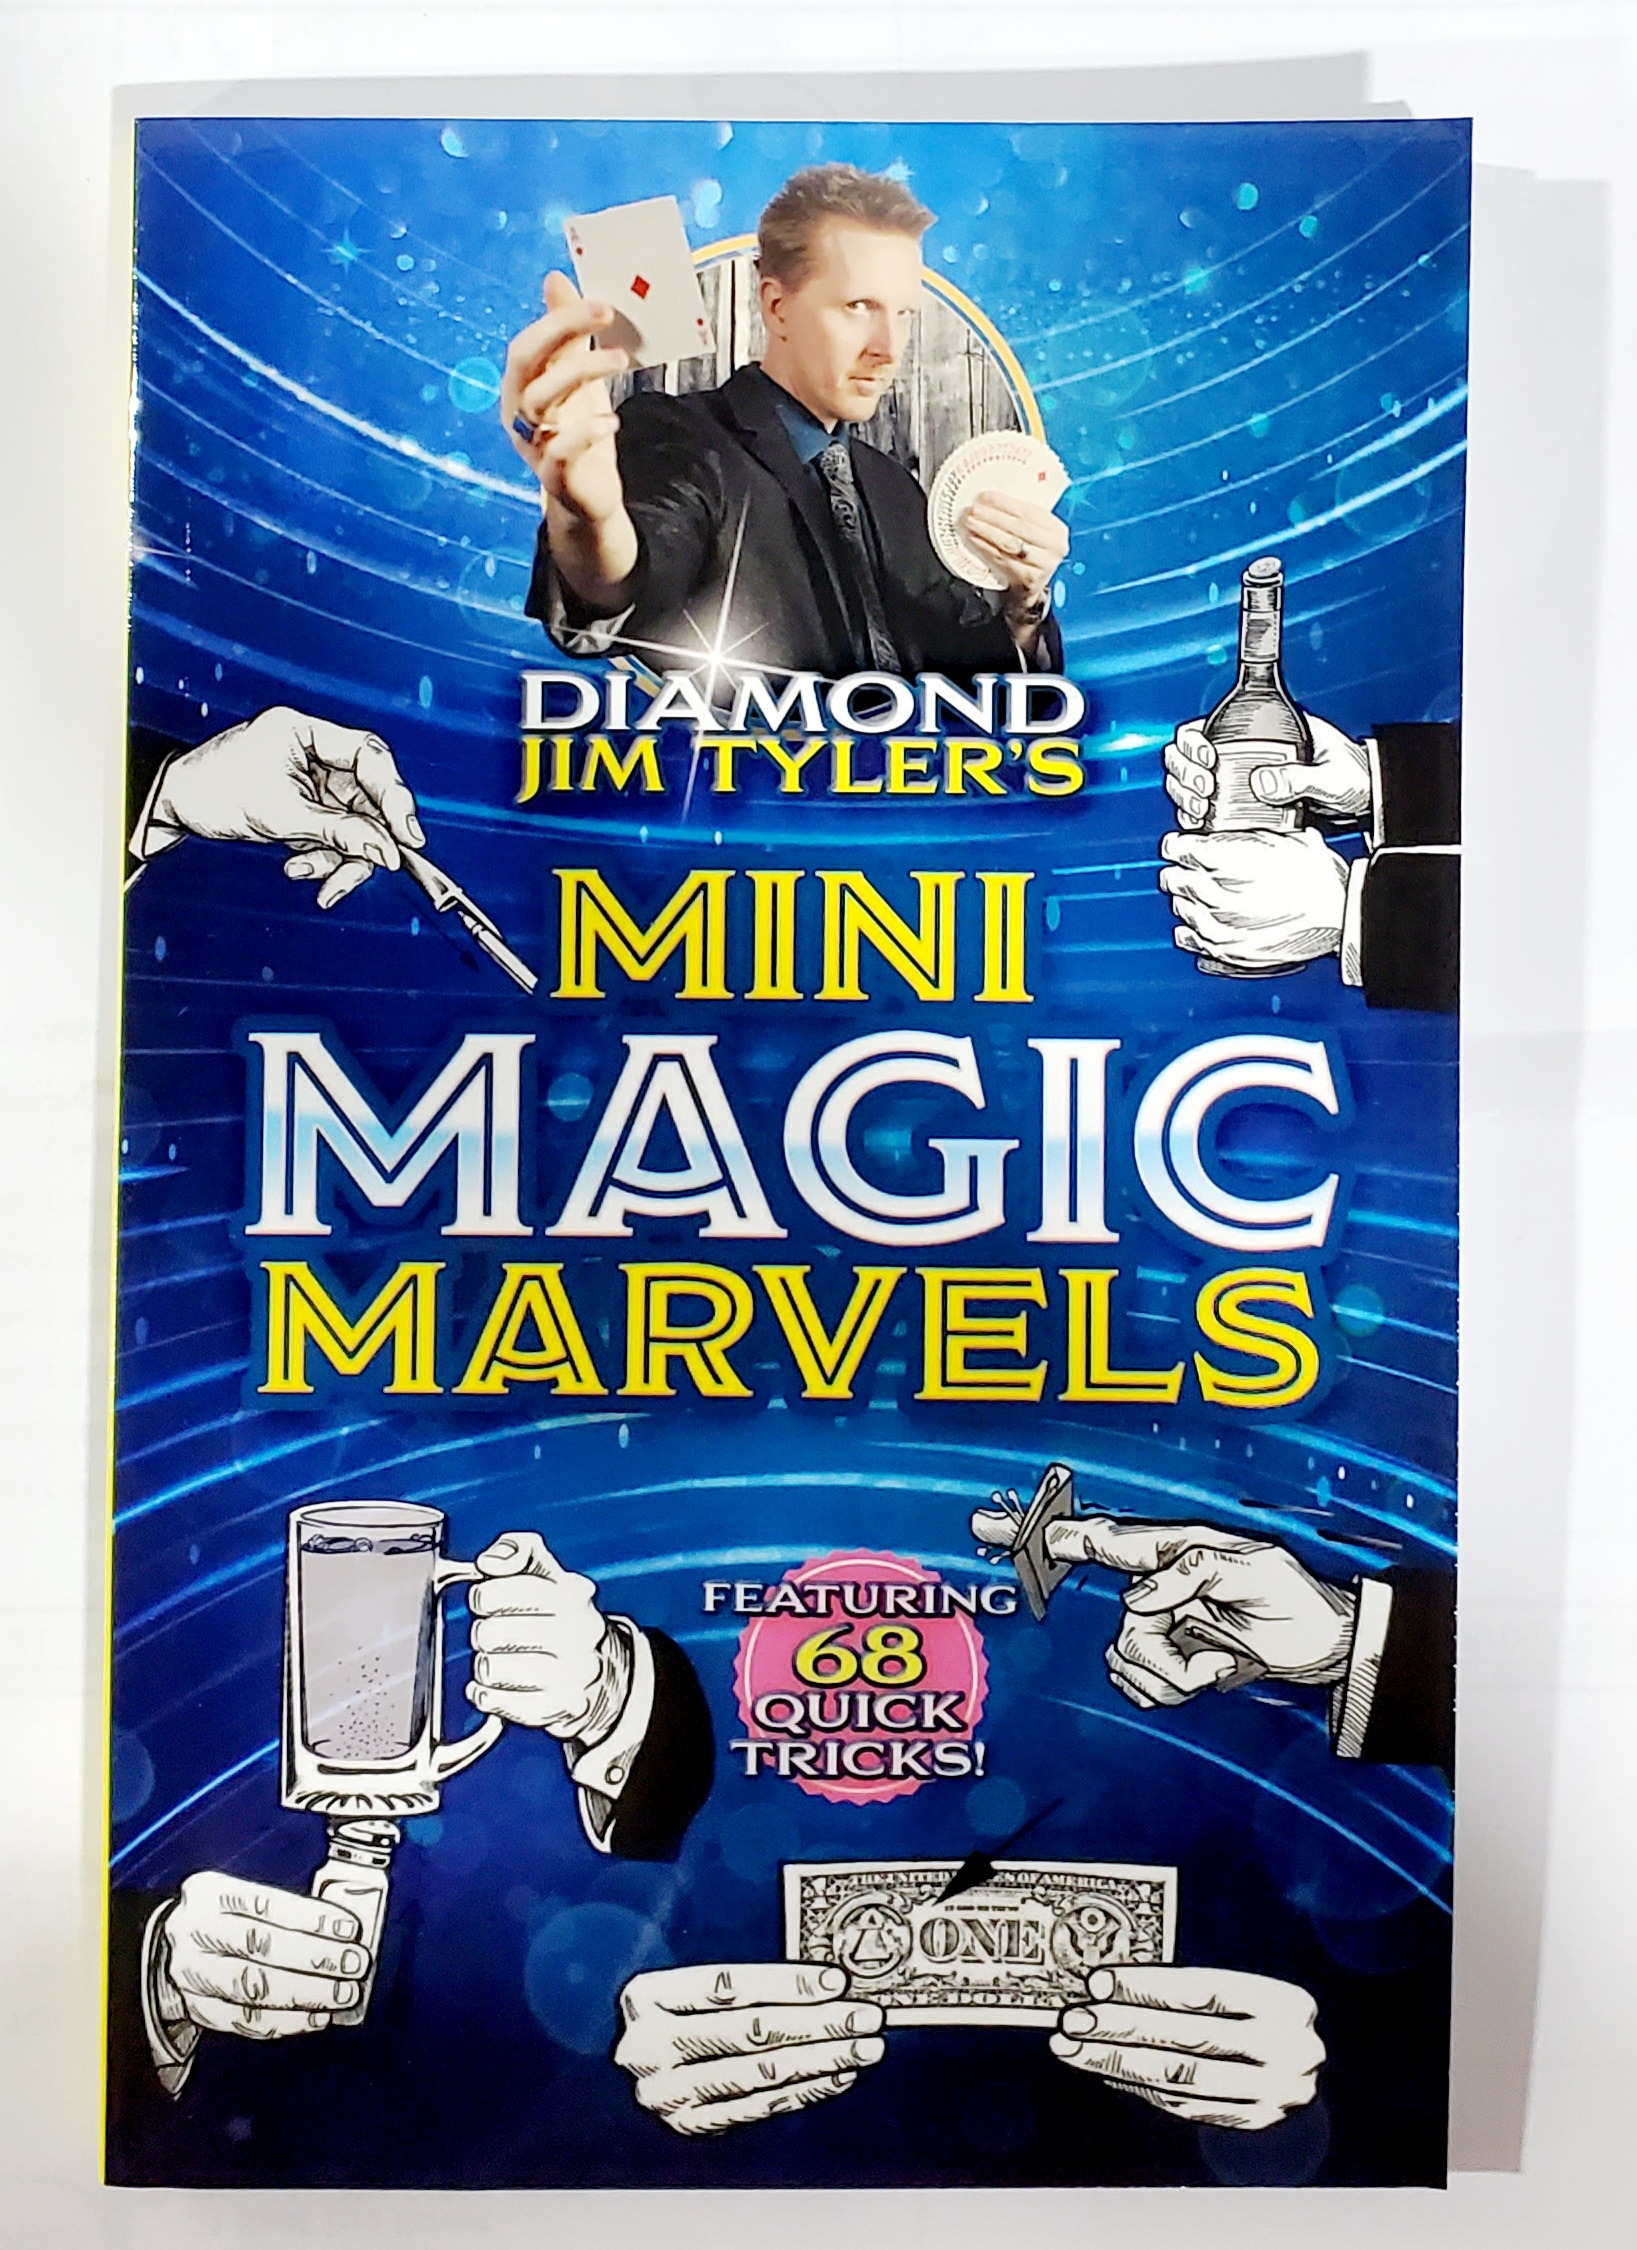 DIAMOND JIM TYLER'S MINI MAGIC MARVELS